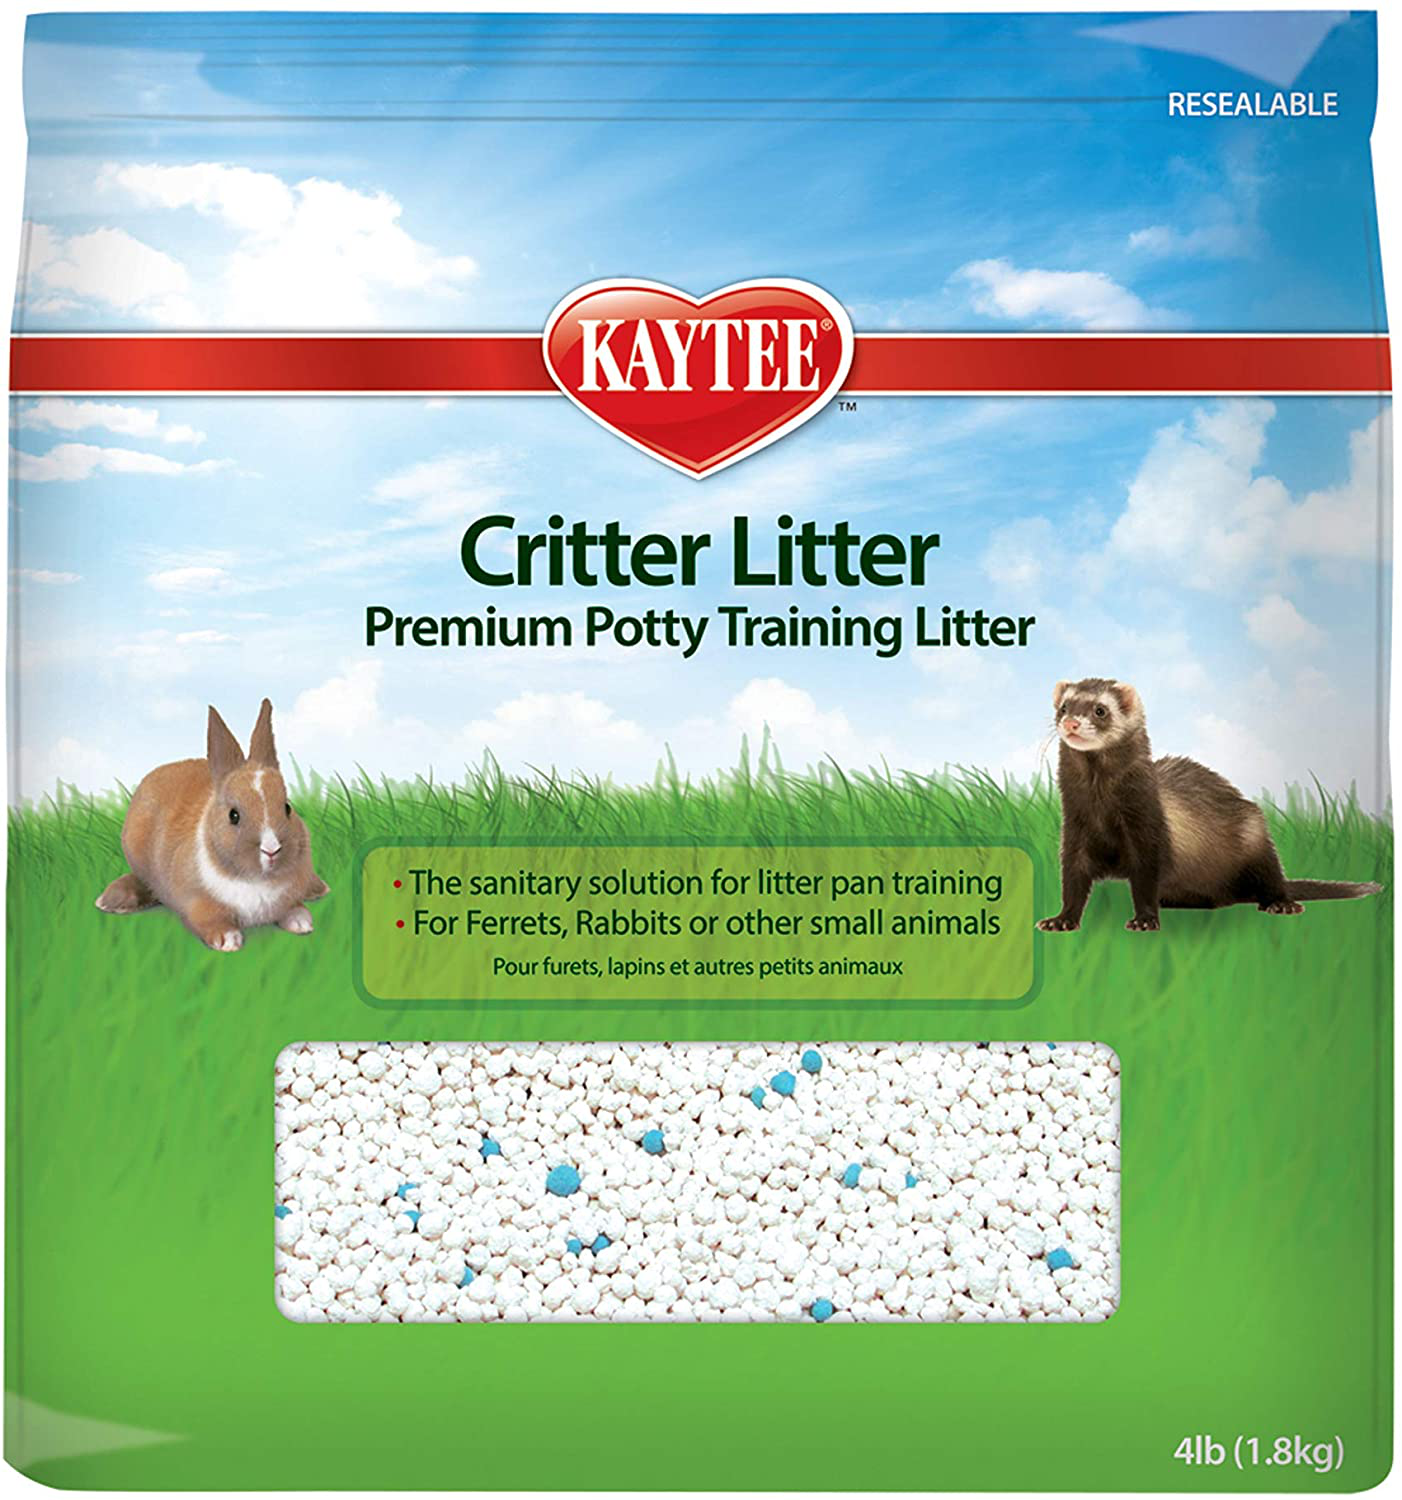 Kaytee Critter Litter Small Animal Premium Potty Training Litter